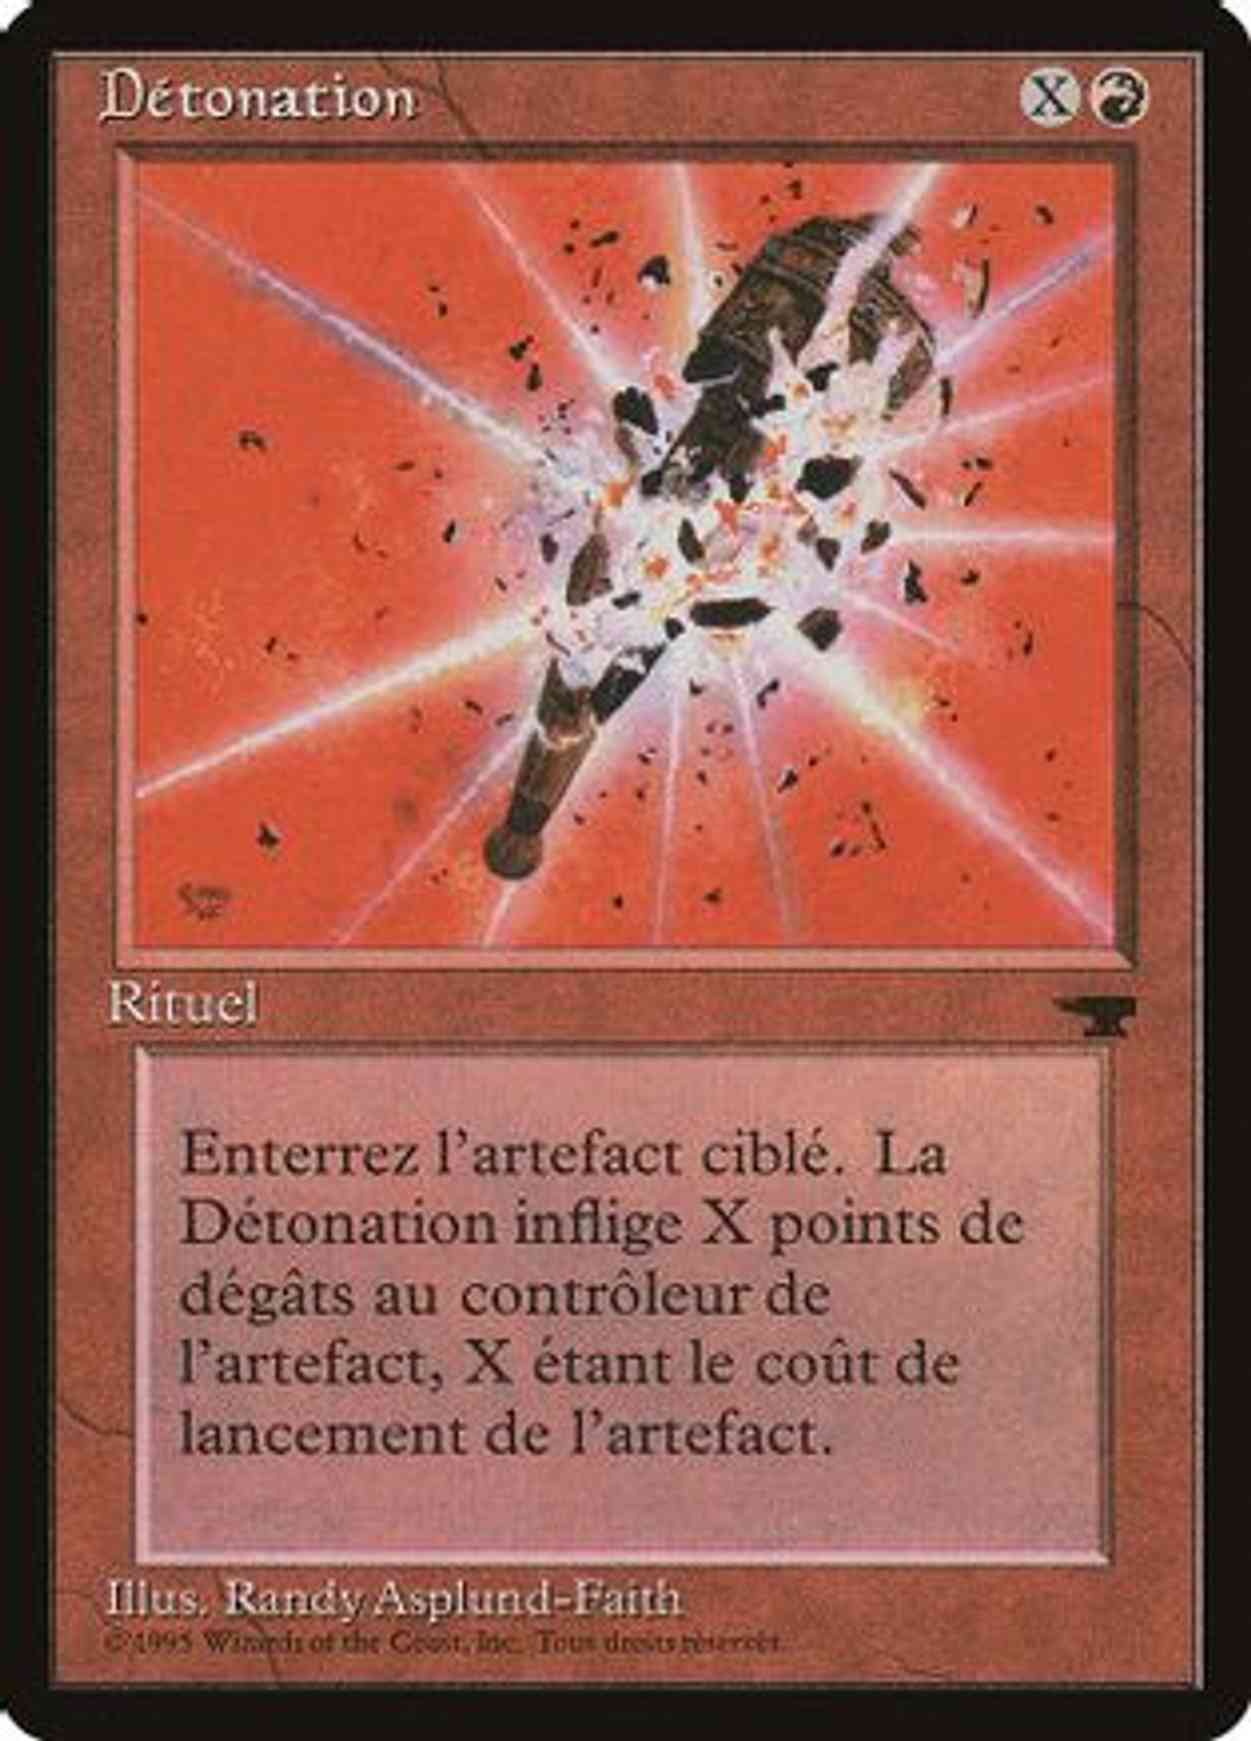 Detonate (French) - "Detonation" magic card front